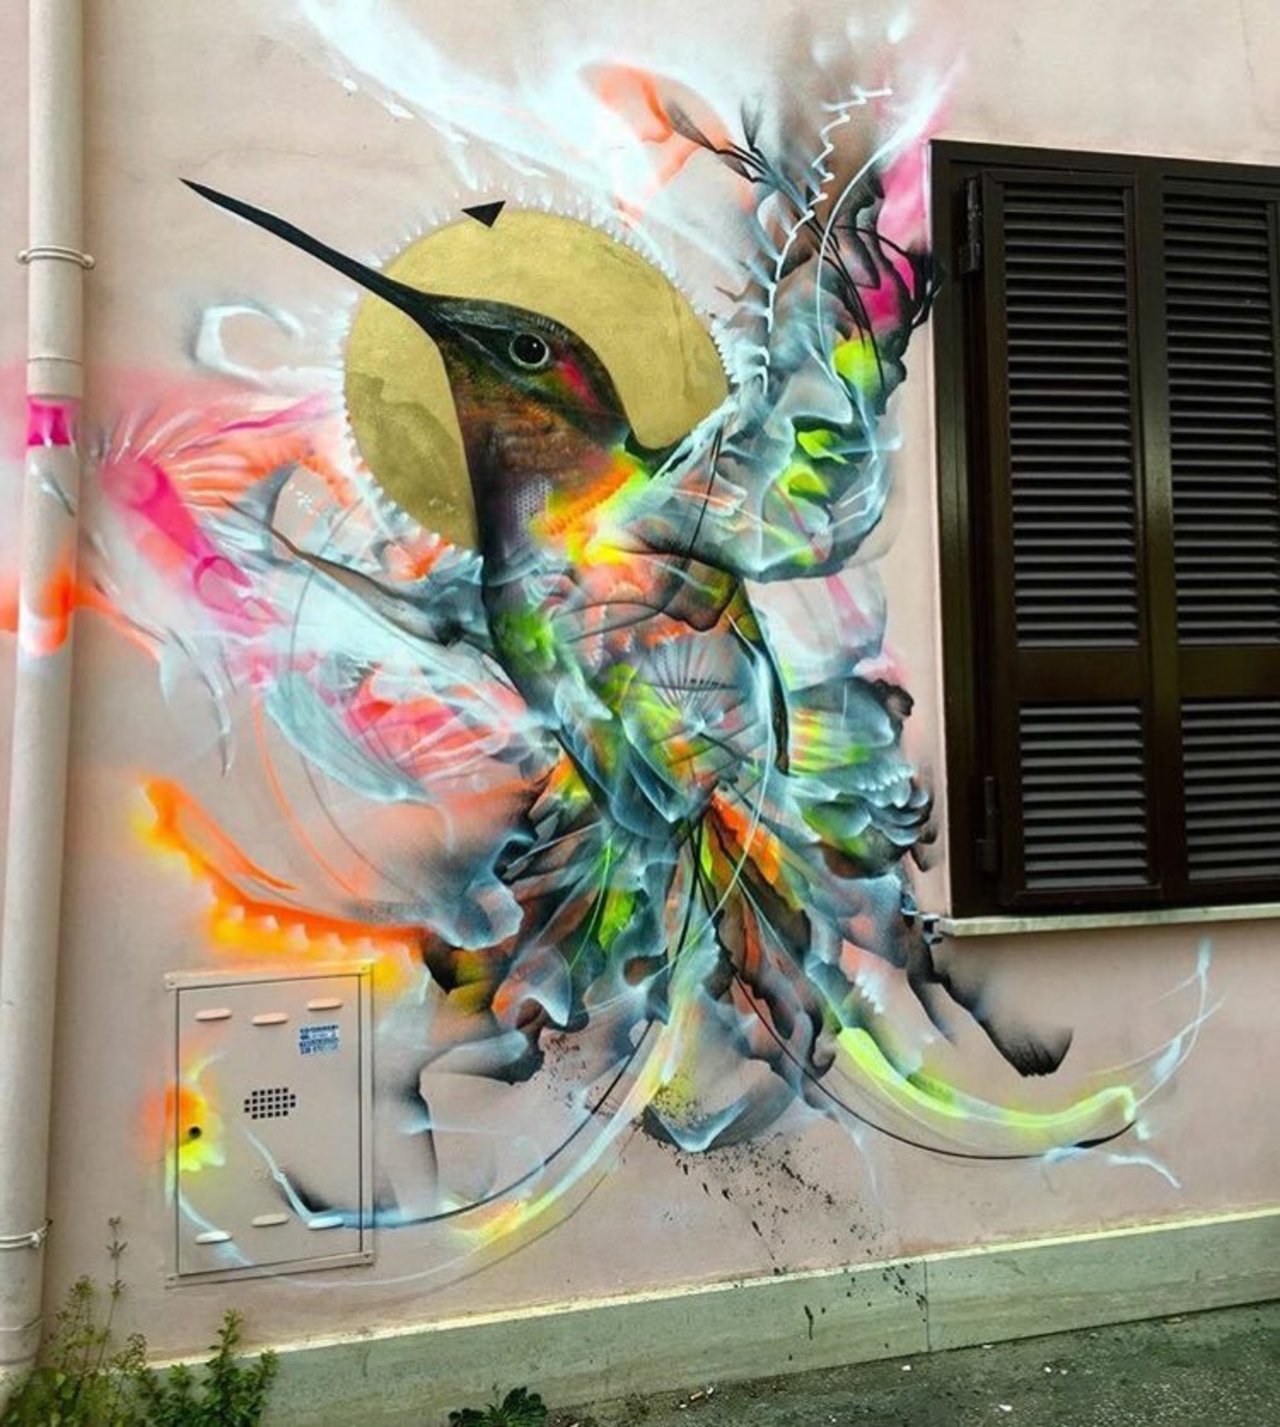 By L7m in Rome, Italy#art #mural #graffiti #streetart https://t.co/cYYVemCrQT